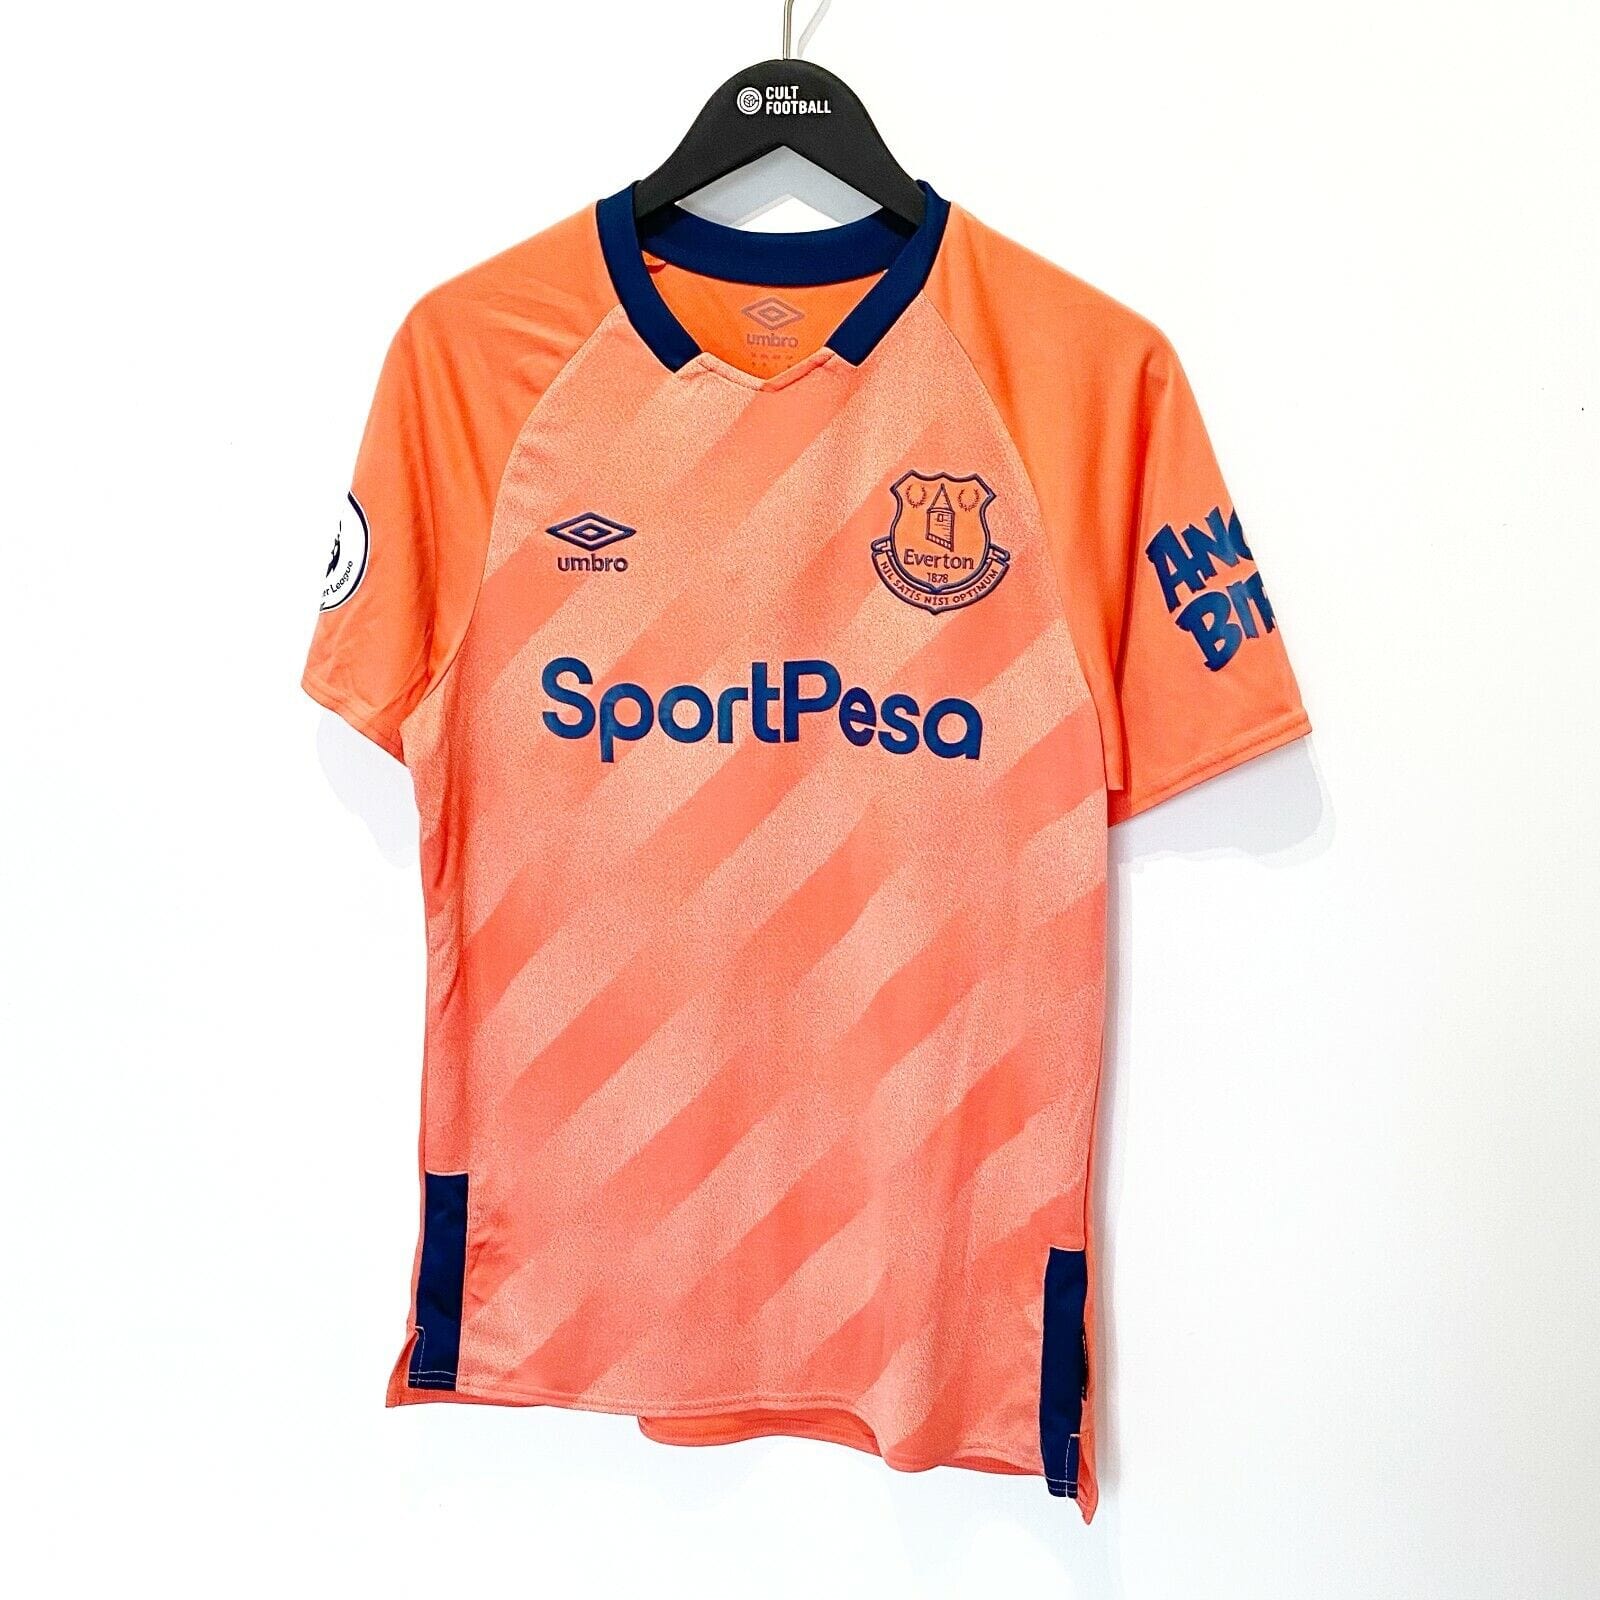 2019/20 ANDRE GOMES #21 Everton Vintage Umbro Away Football Shirt (M) Portugal